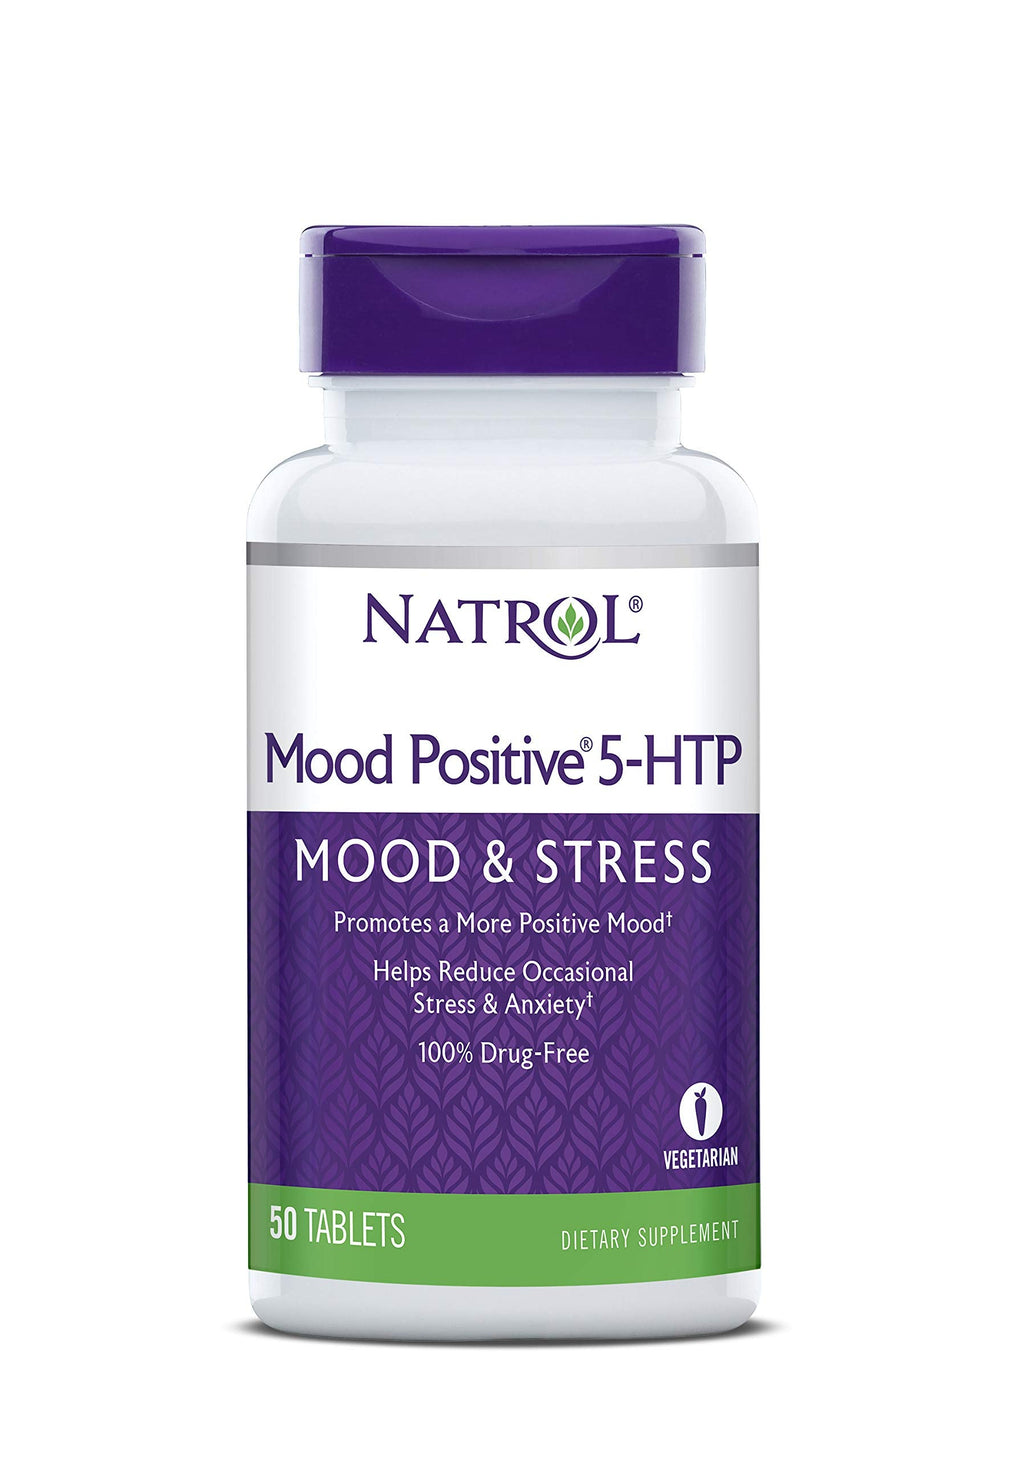 [Australia] - Natrol 5-HTP Mood Positive Tablets, 50 Count Tablet 50 Count (Pack of 1) 